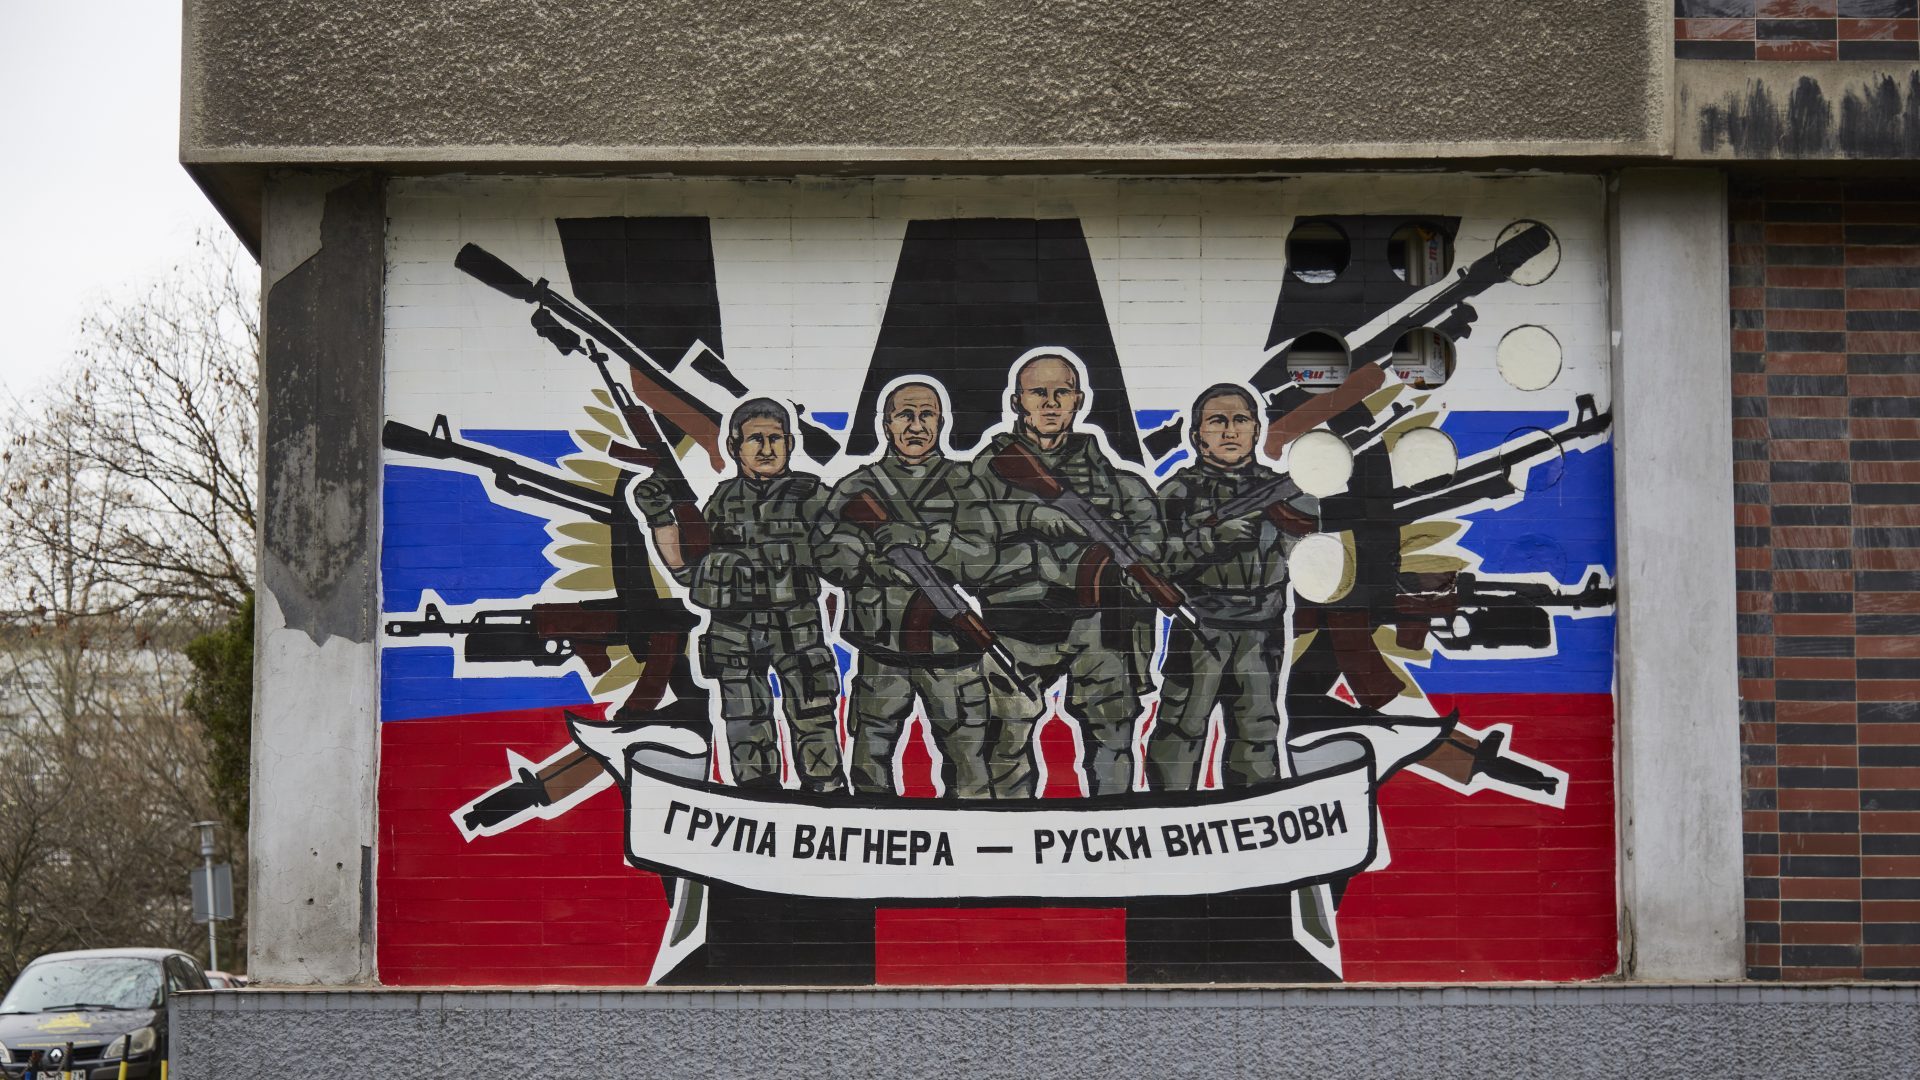 A mural in Belgrade, Serbia praises the Russian Wagner group and its mercenaries fighting in Ukraine. Photo: Pierre Crom 